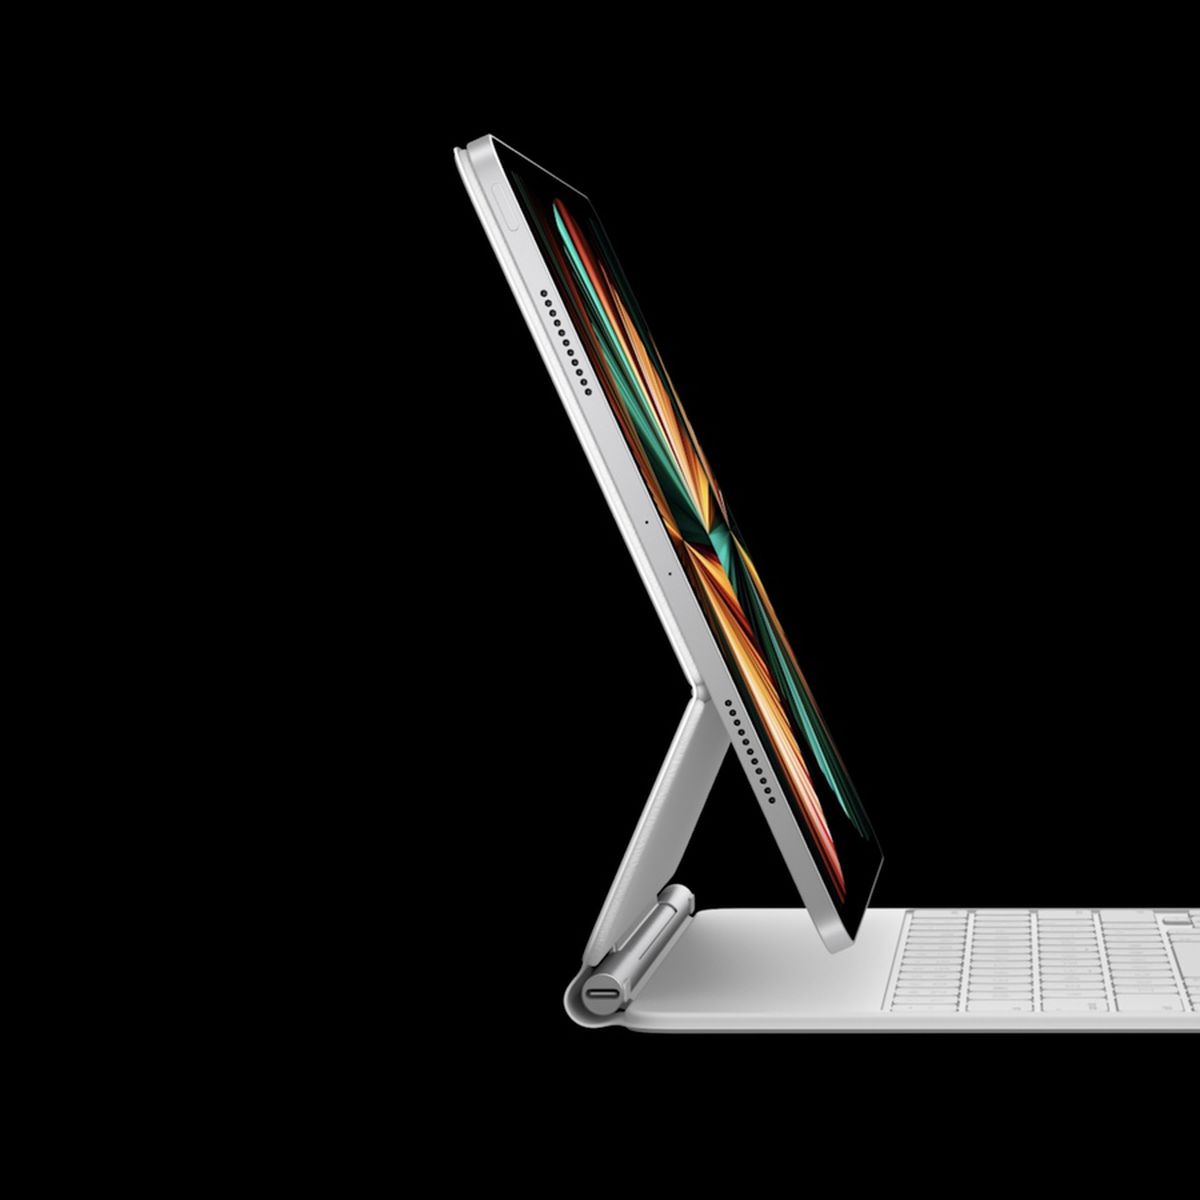 Magic Keyboard iPad Pro 11-inch 2021